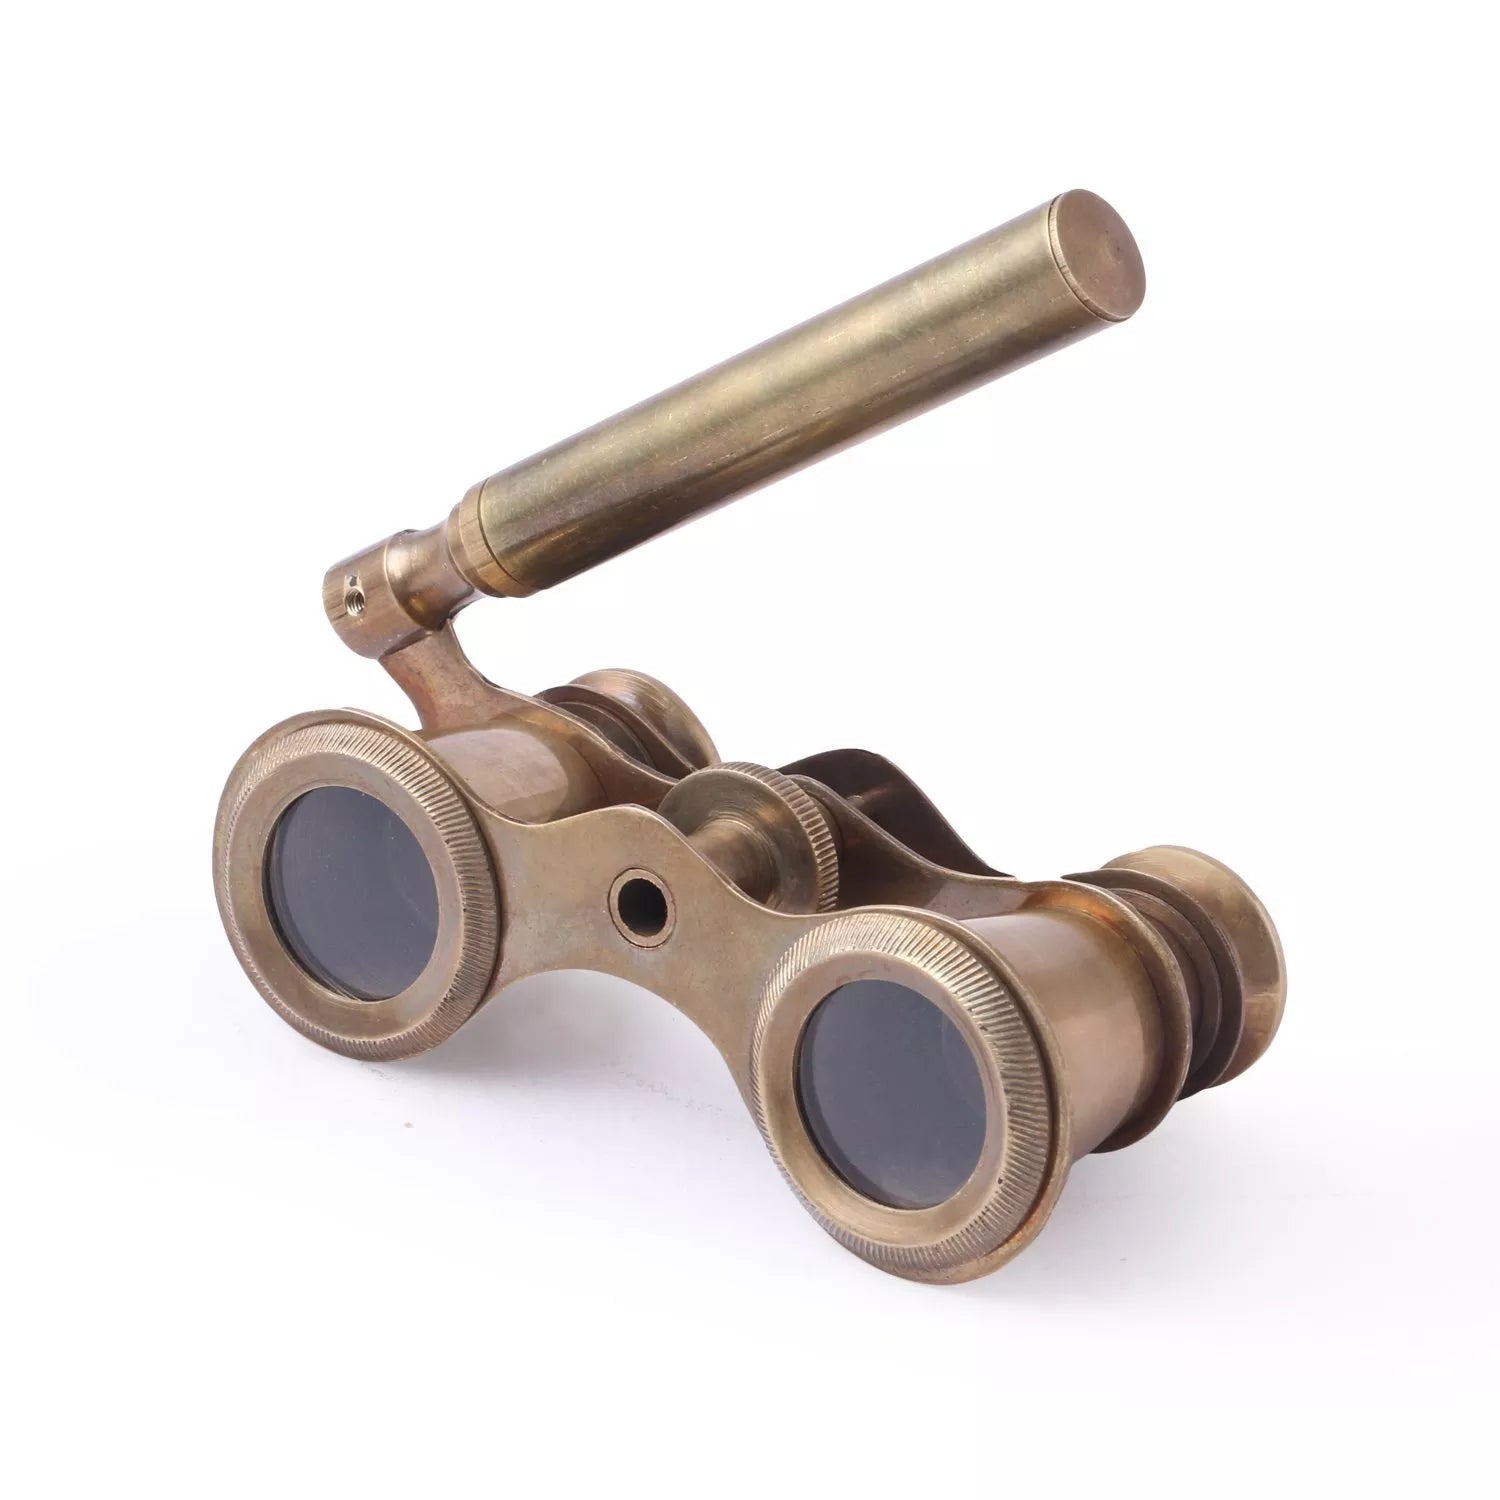 Antique Brass Vintage style Binocular Telescope Binocular Handicraft item